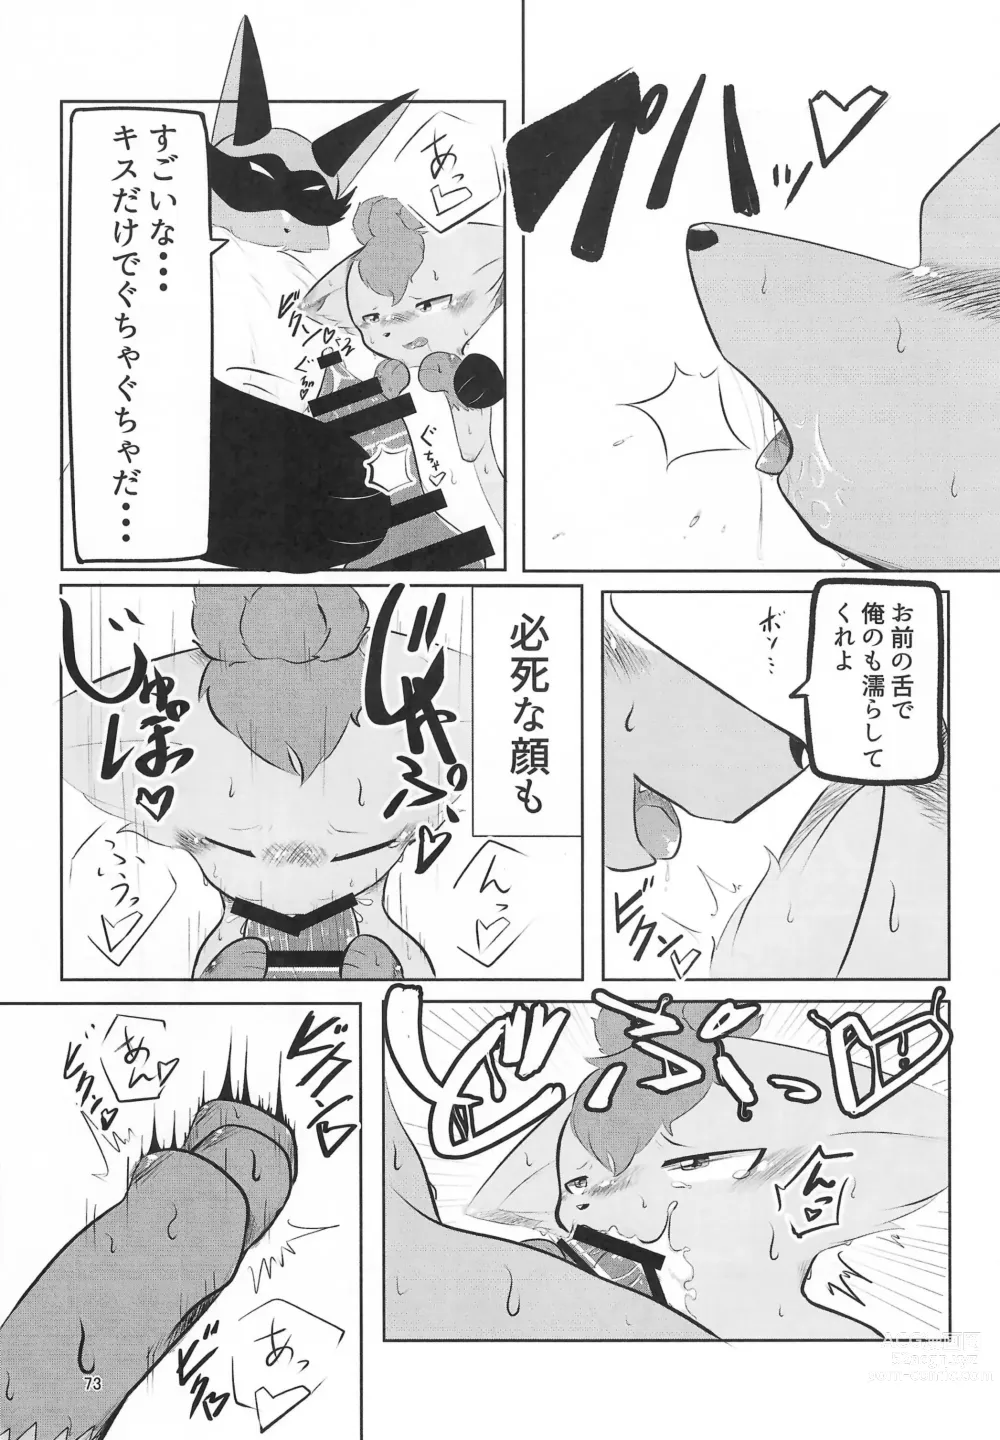 Page 73 of doujinshi Yotsu Ashi BL Anthology K9S